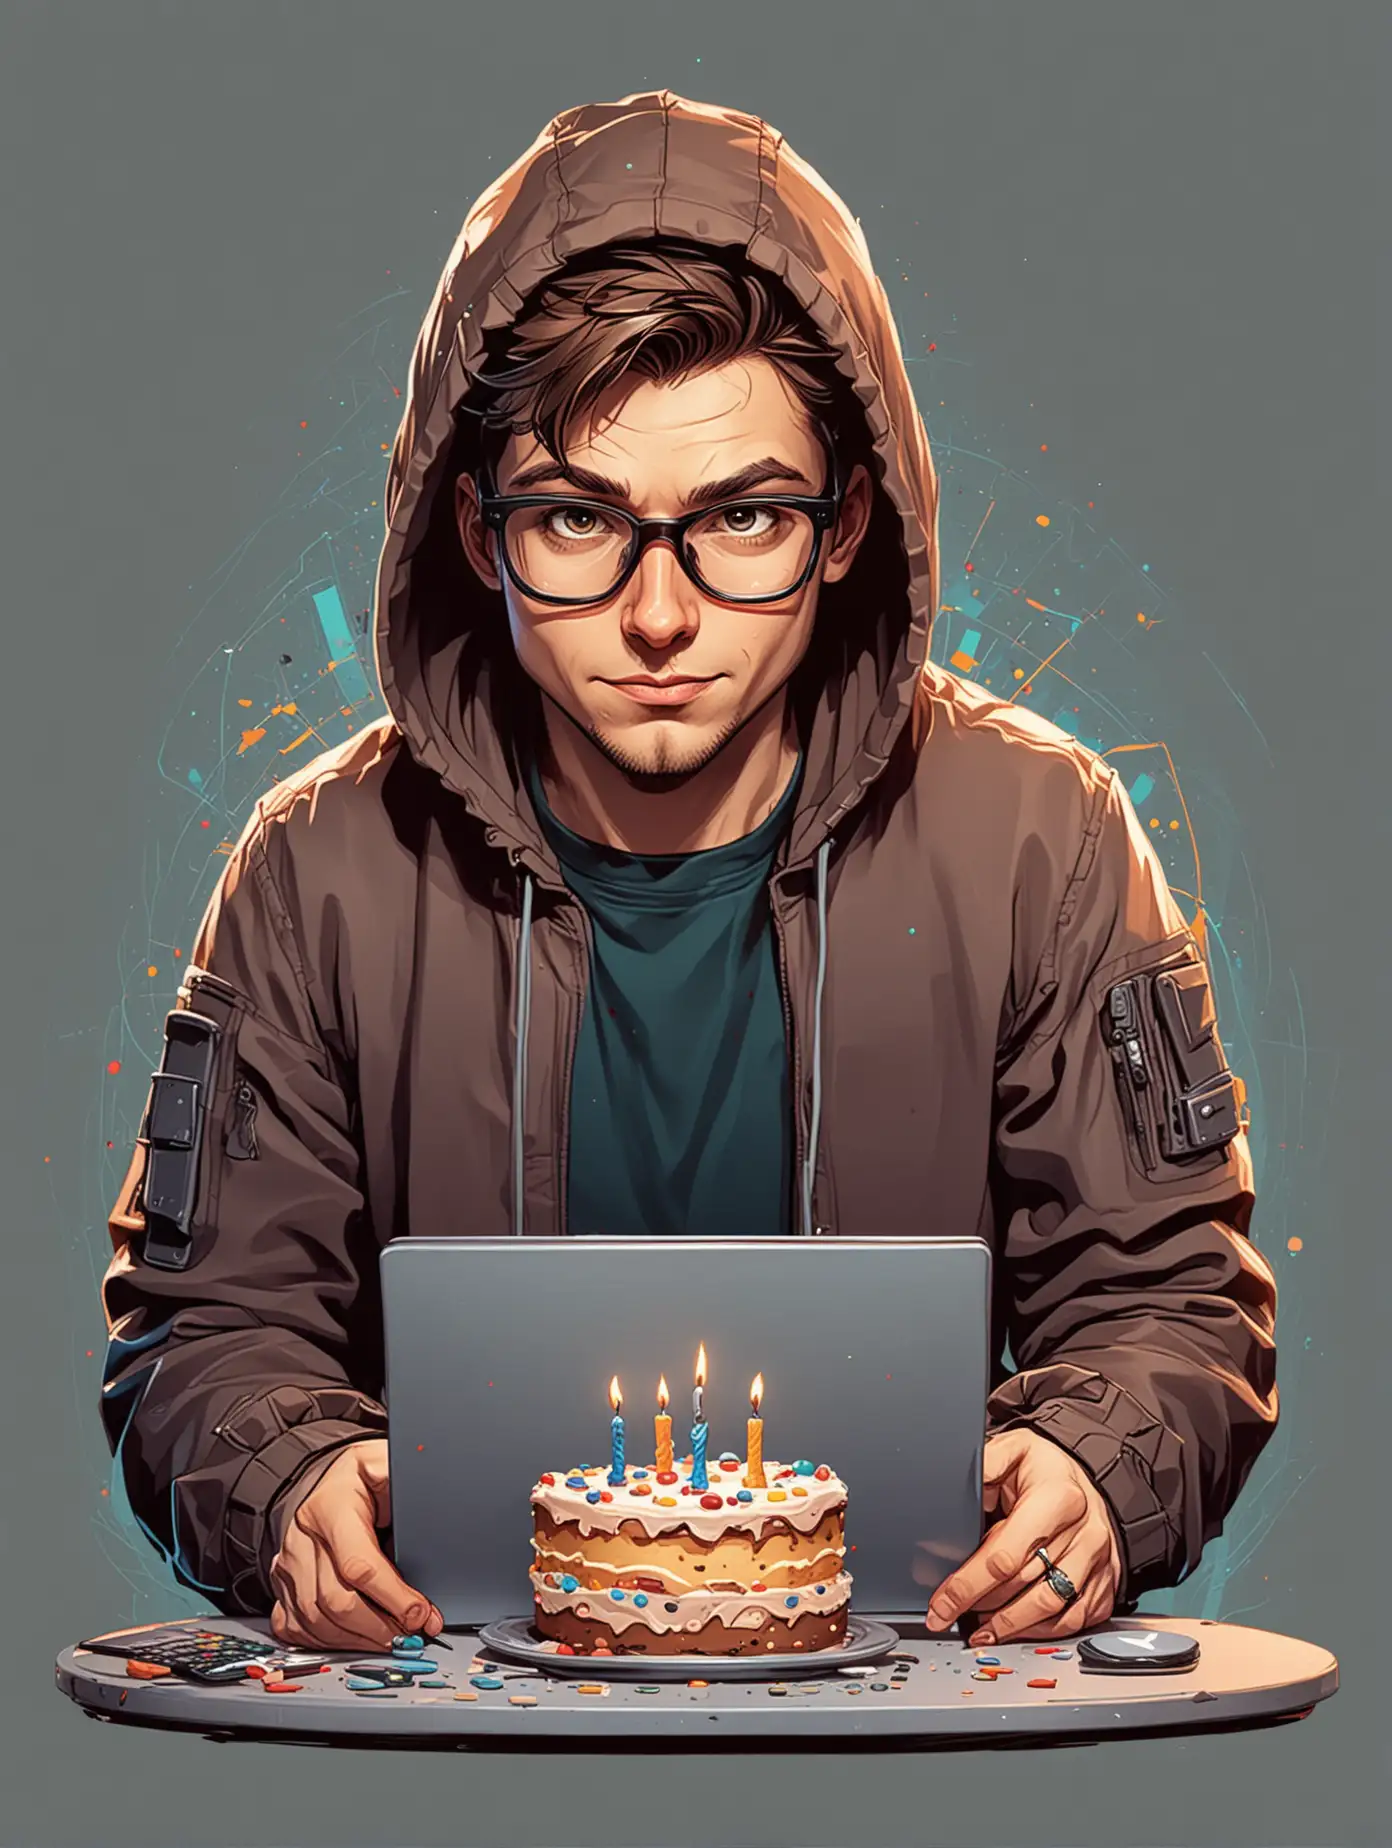 Cartoon Male Ethical Hacker Celebrates Birthday with TechThemed Cake